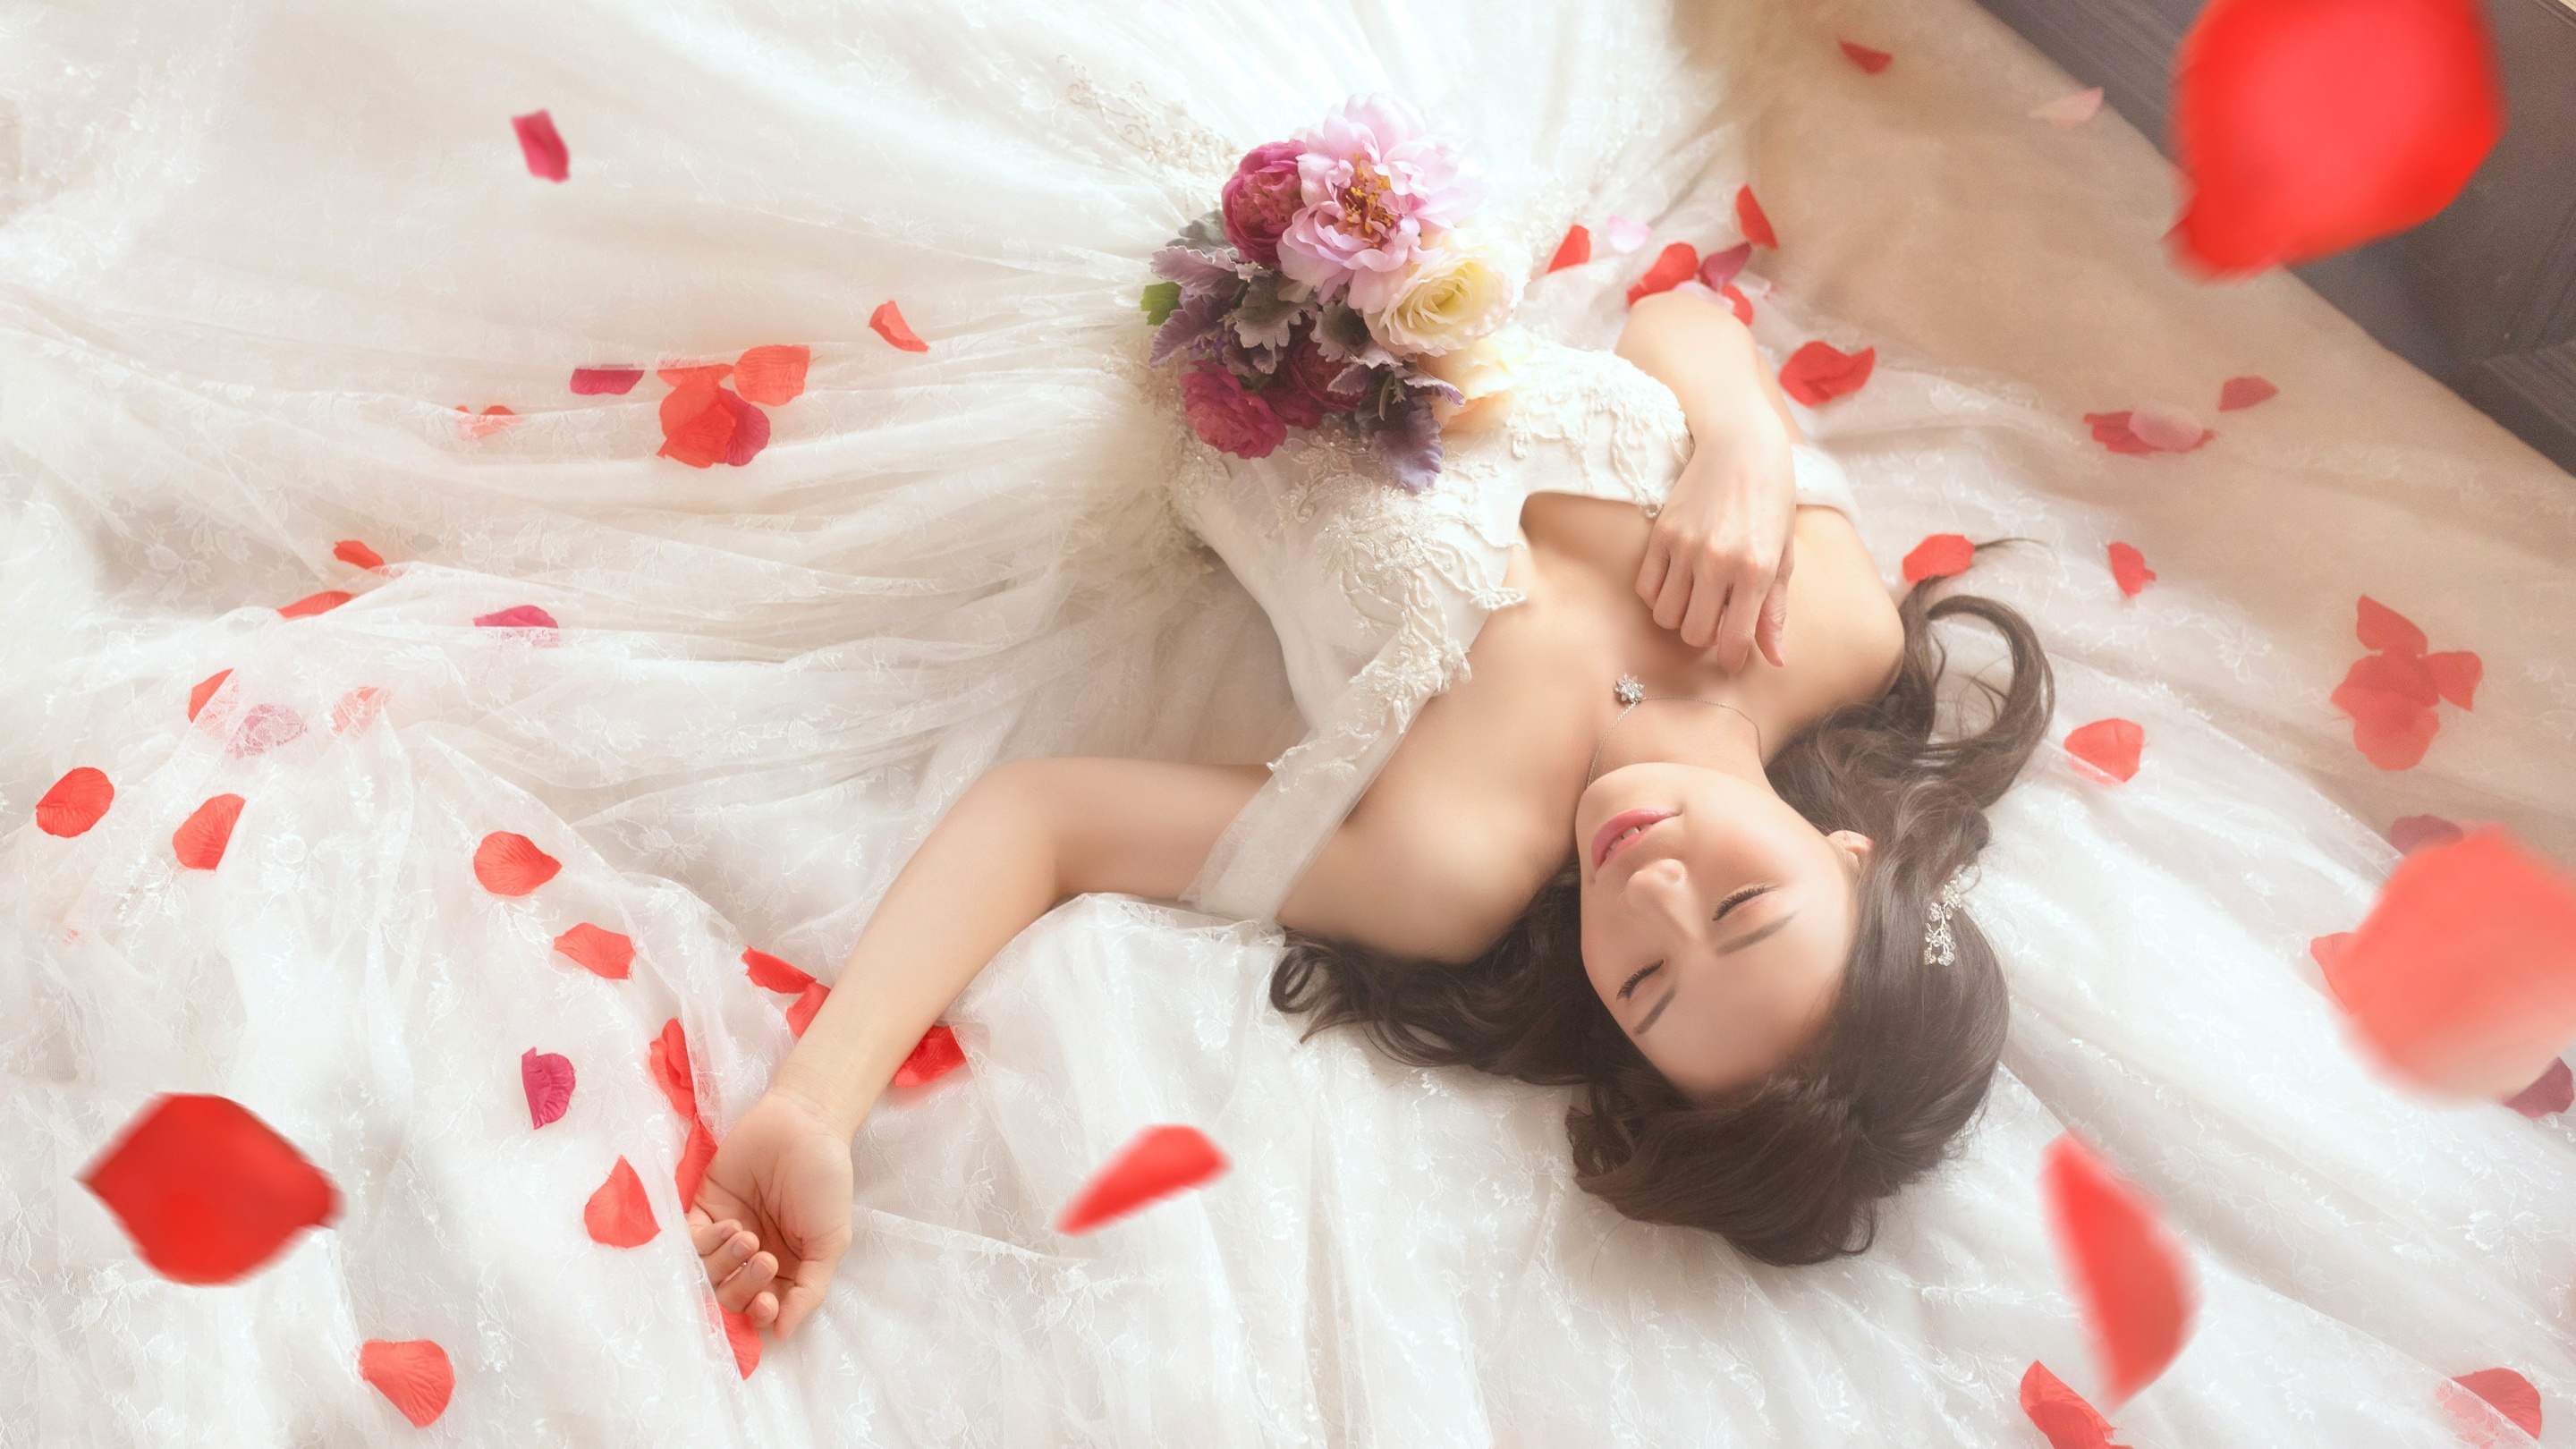 Model Women Asian Red Lipstick Closed Eyes White Dress Lying Down Flowers 2880x1620